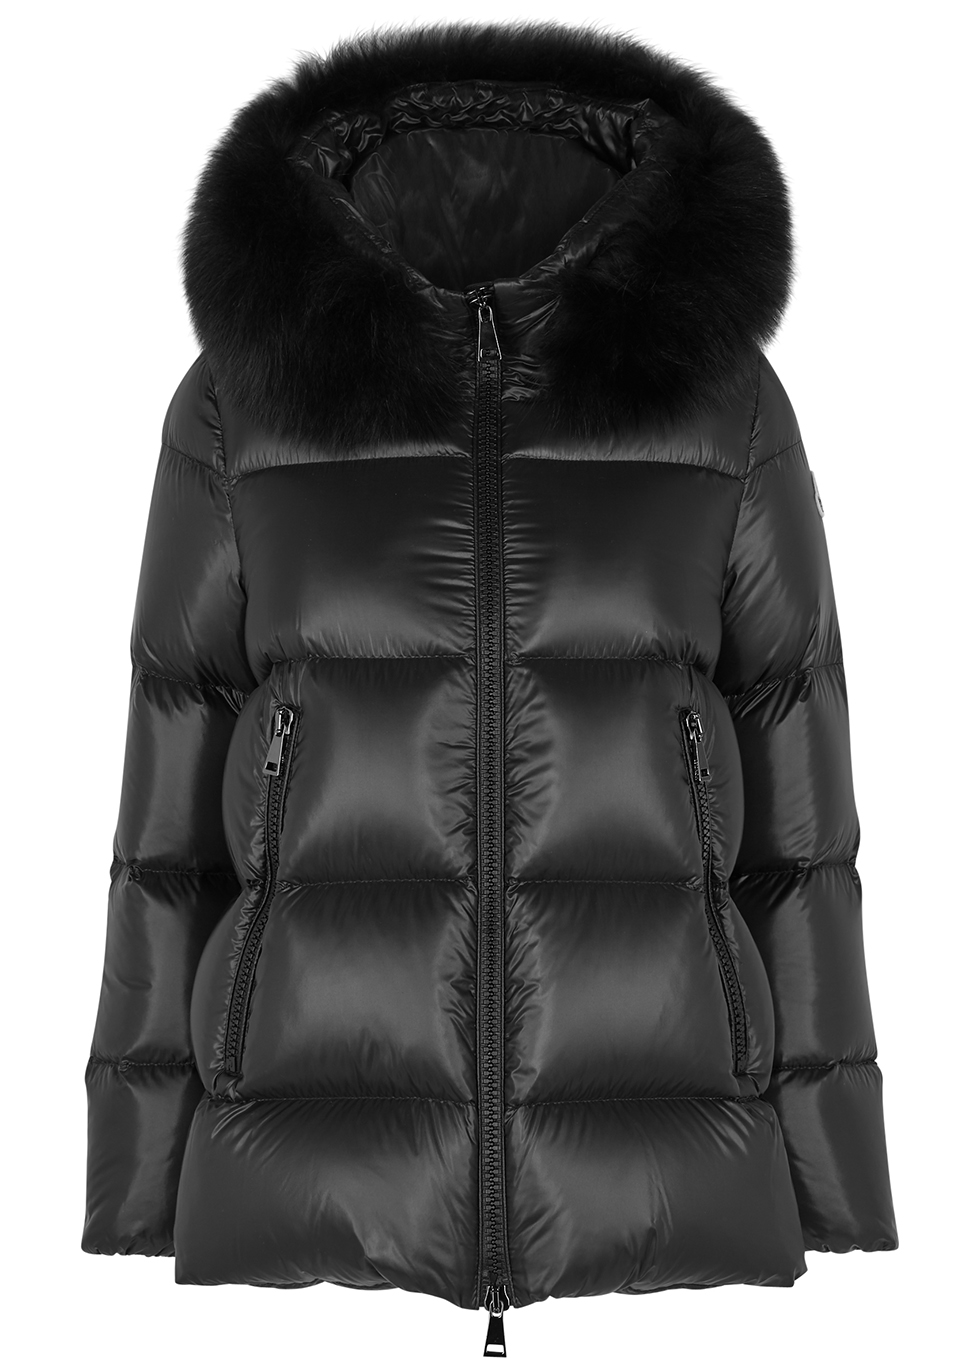 moncler jacket with fur